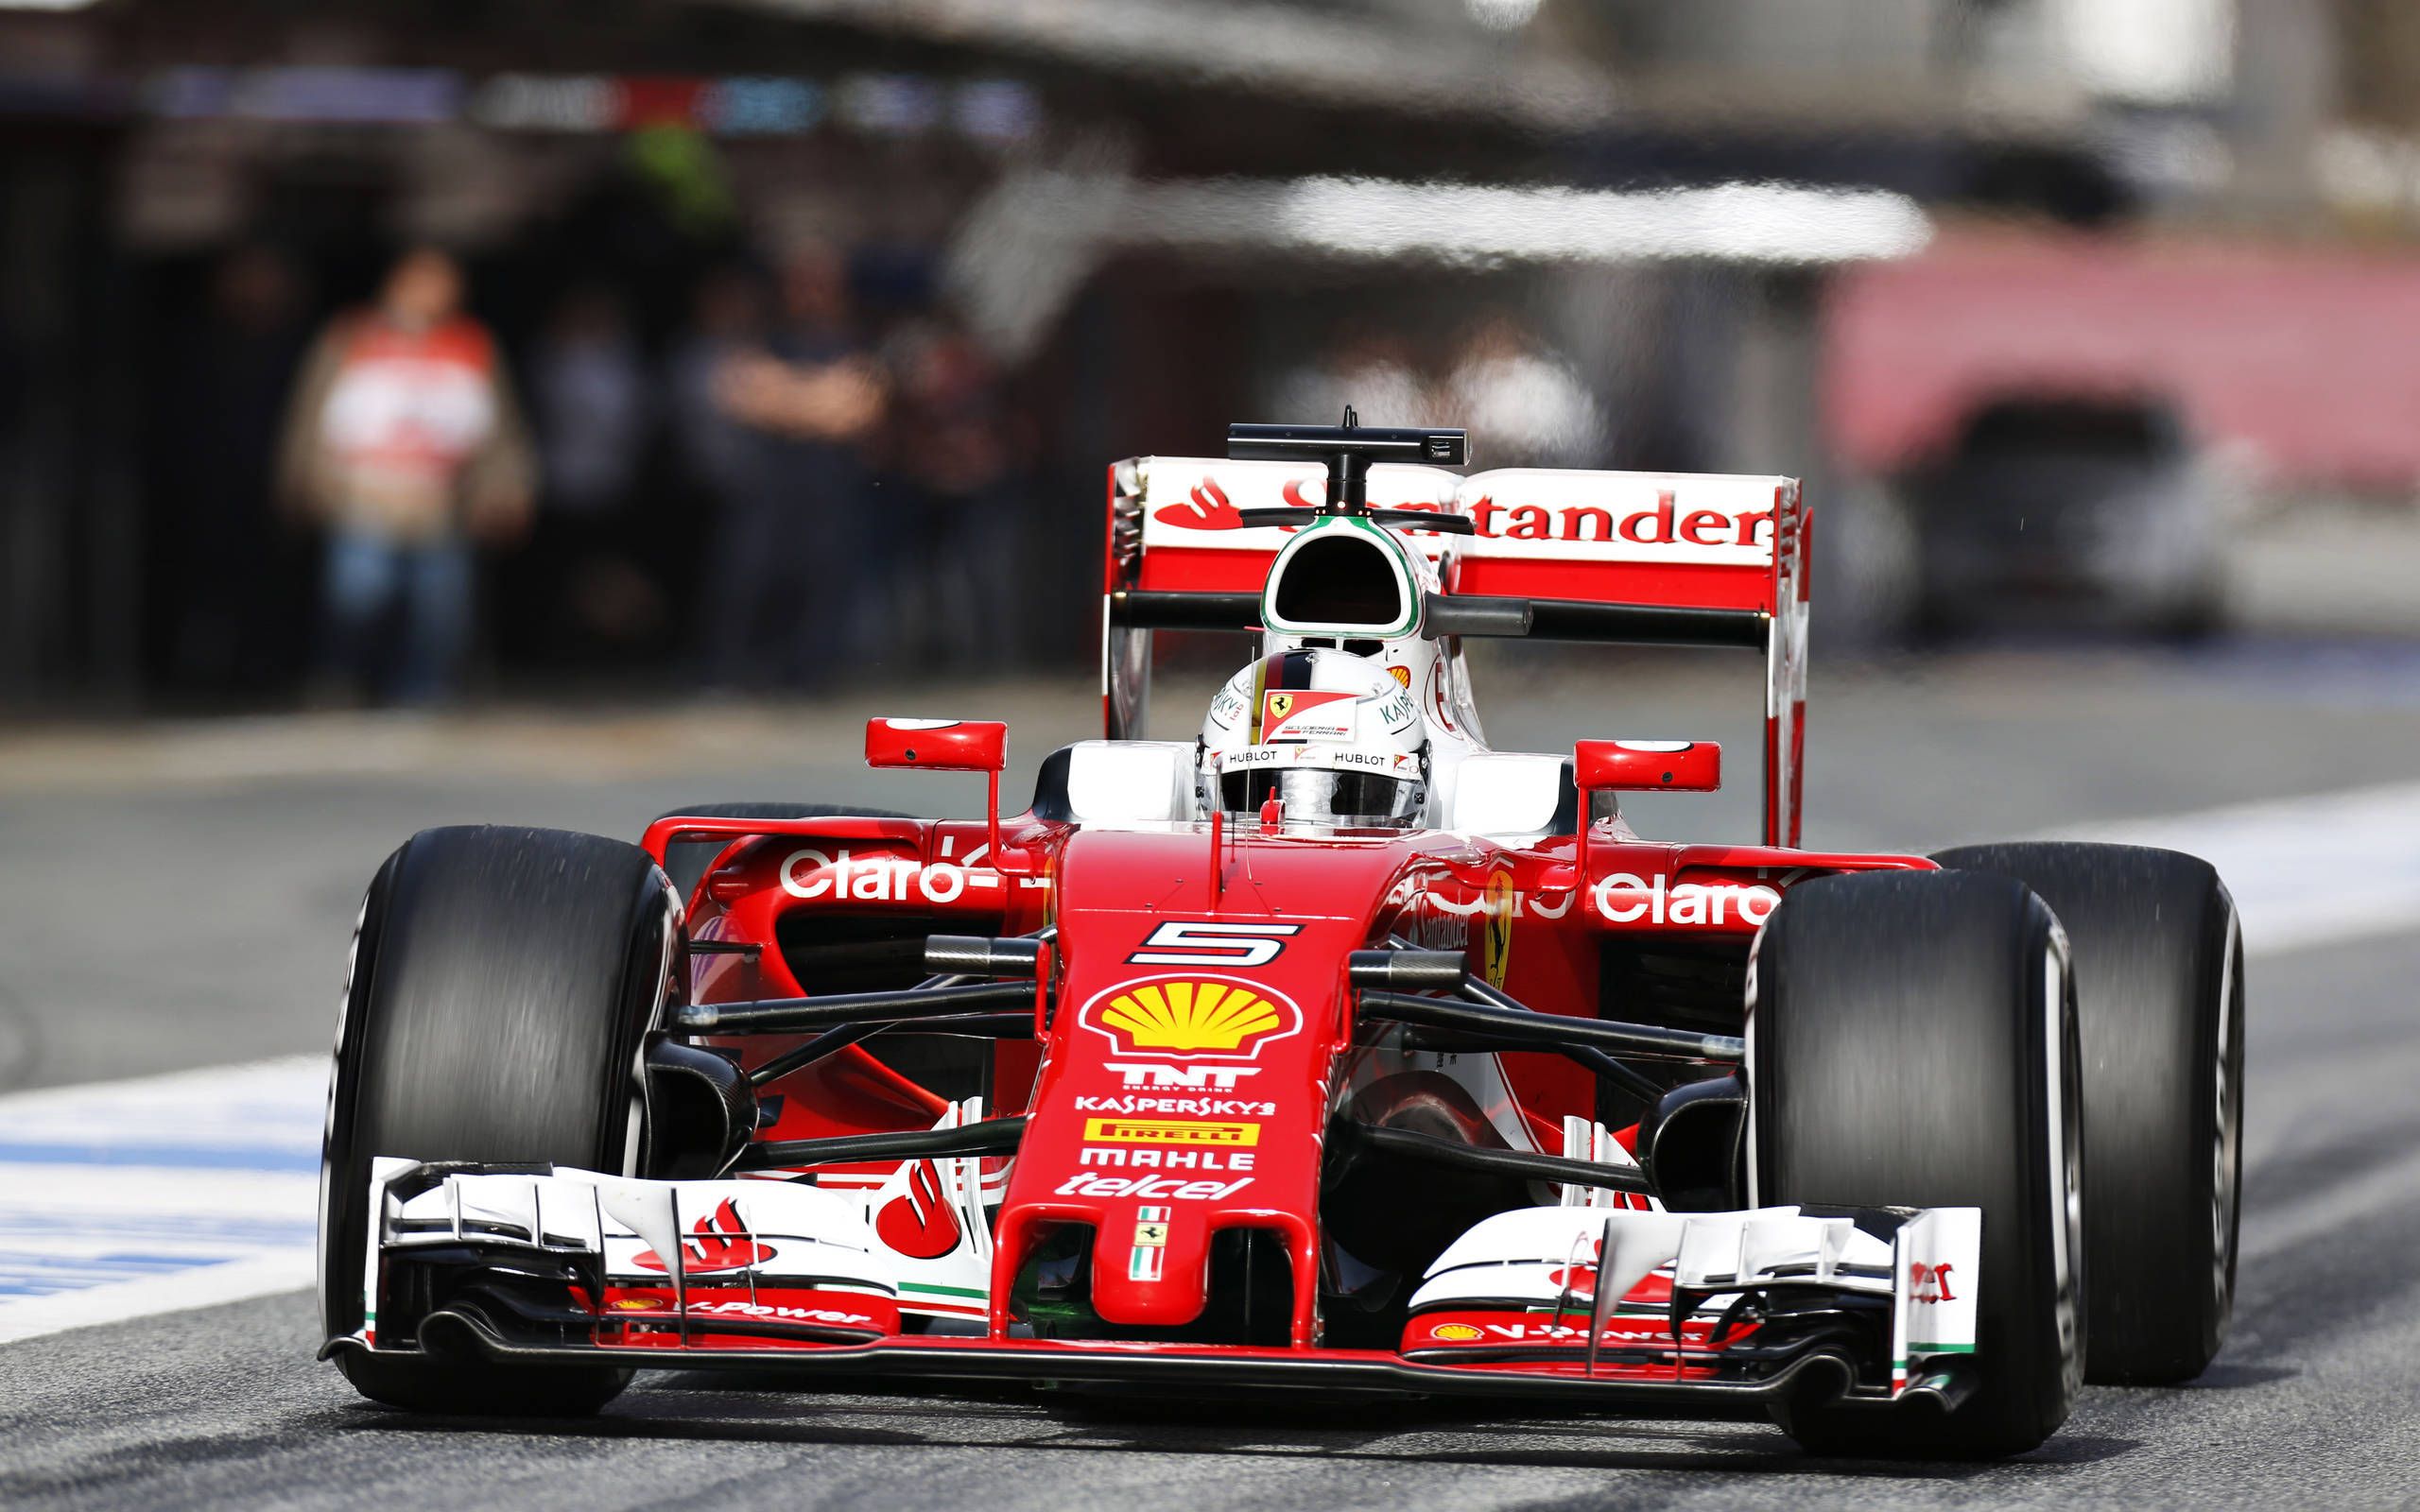 F1 results Ferrari, Sebastian Vettel lead pack at first day of test in Spain